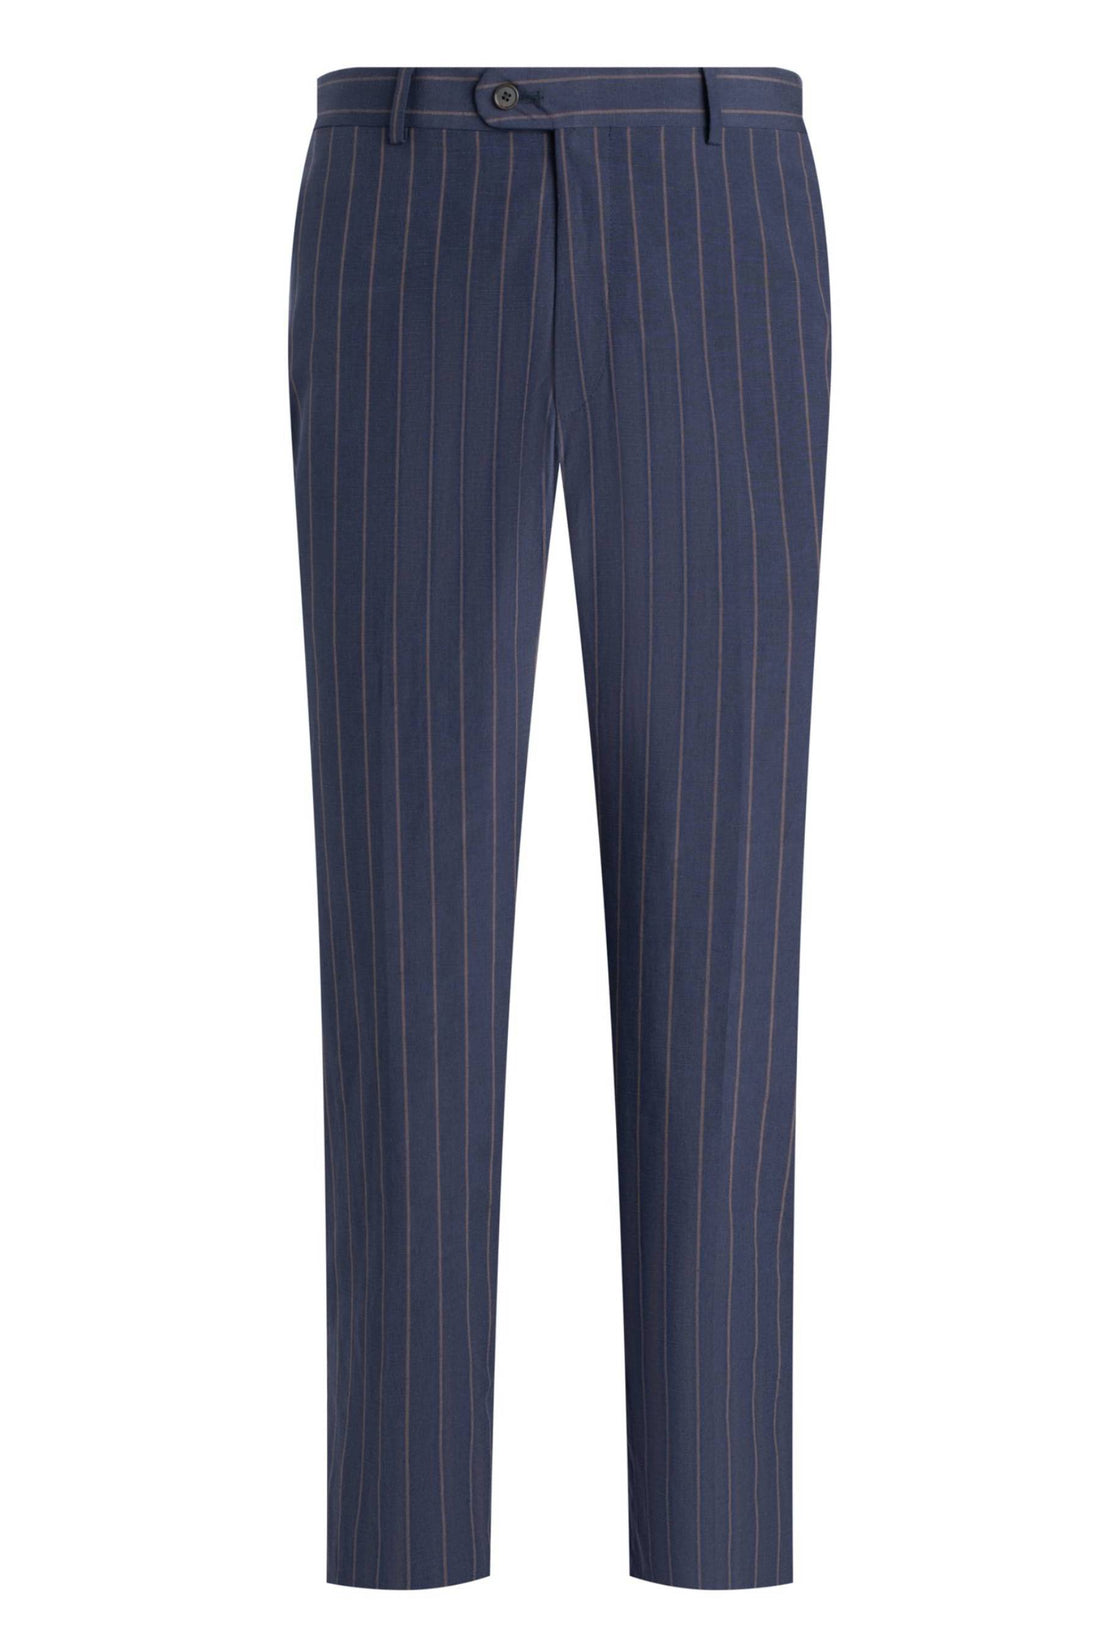 Heritage Gold Dark Blue Stripe Silk Linen Suit Front Pant